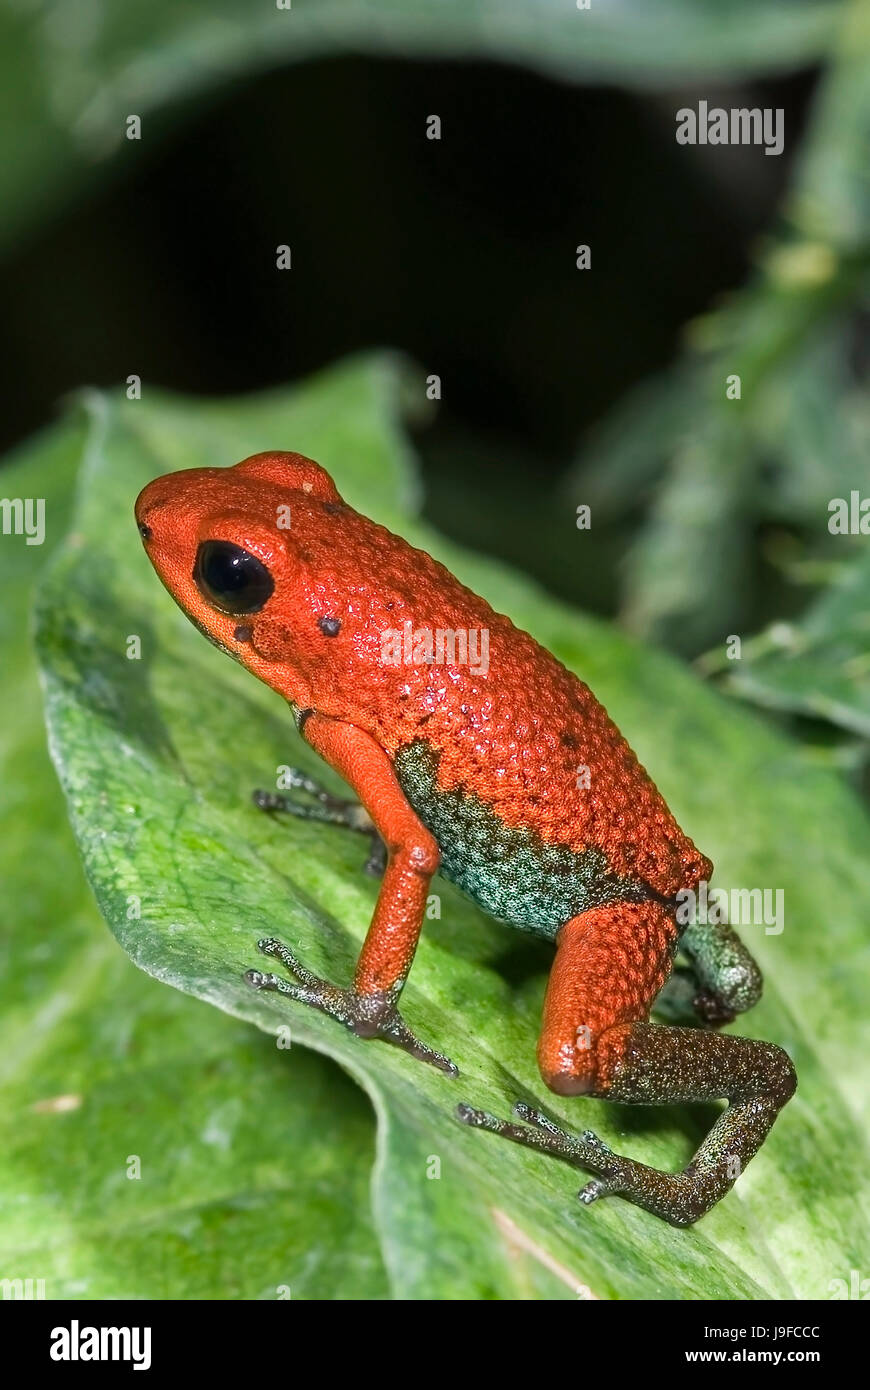 macro, close-up, macro admission, close up view, colour, amphibian, green, Stock Photo